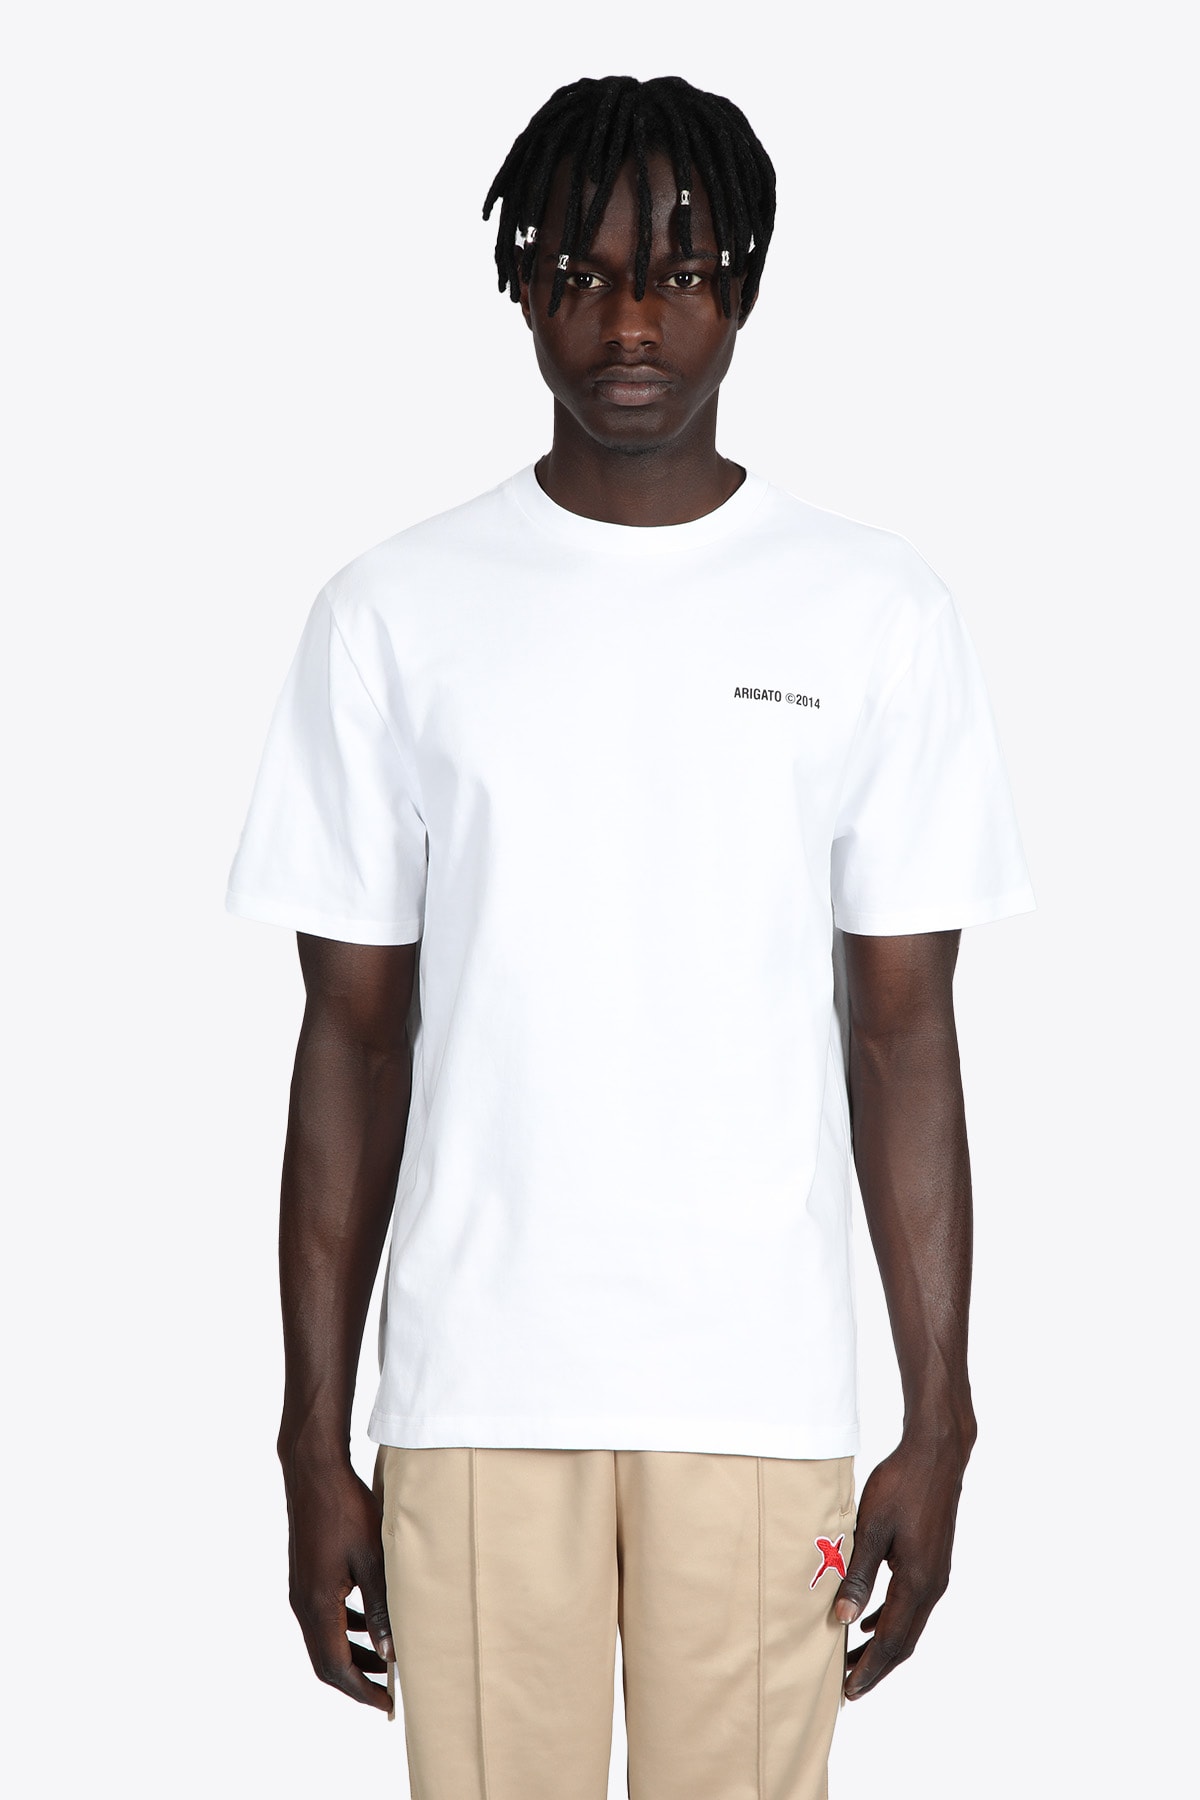 Axel Arigato London T-shirt White cotton t-shirt with chest logo - London T-shirt